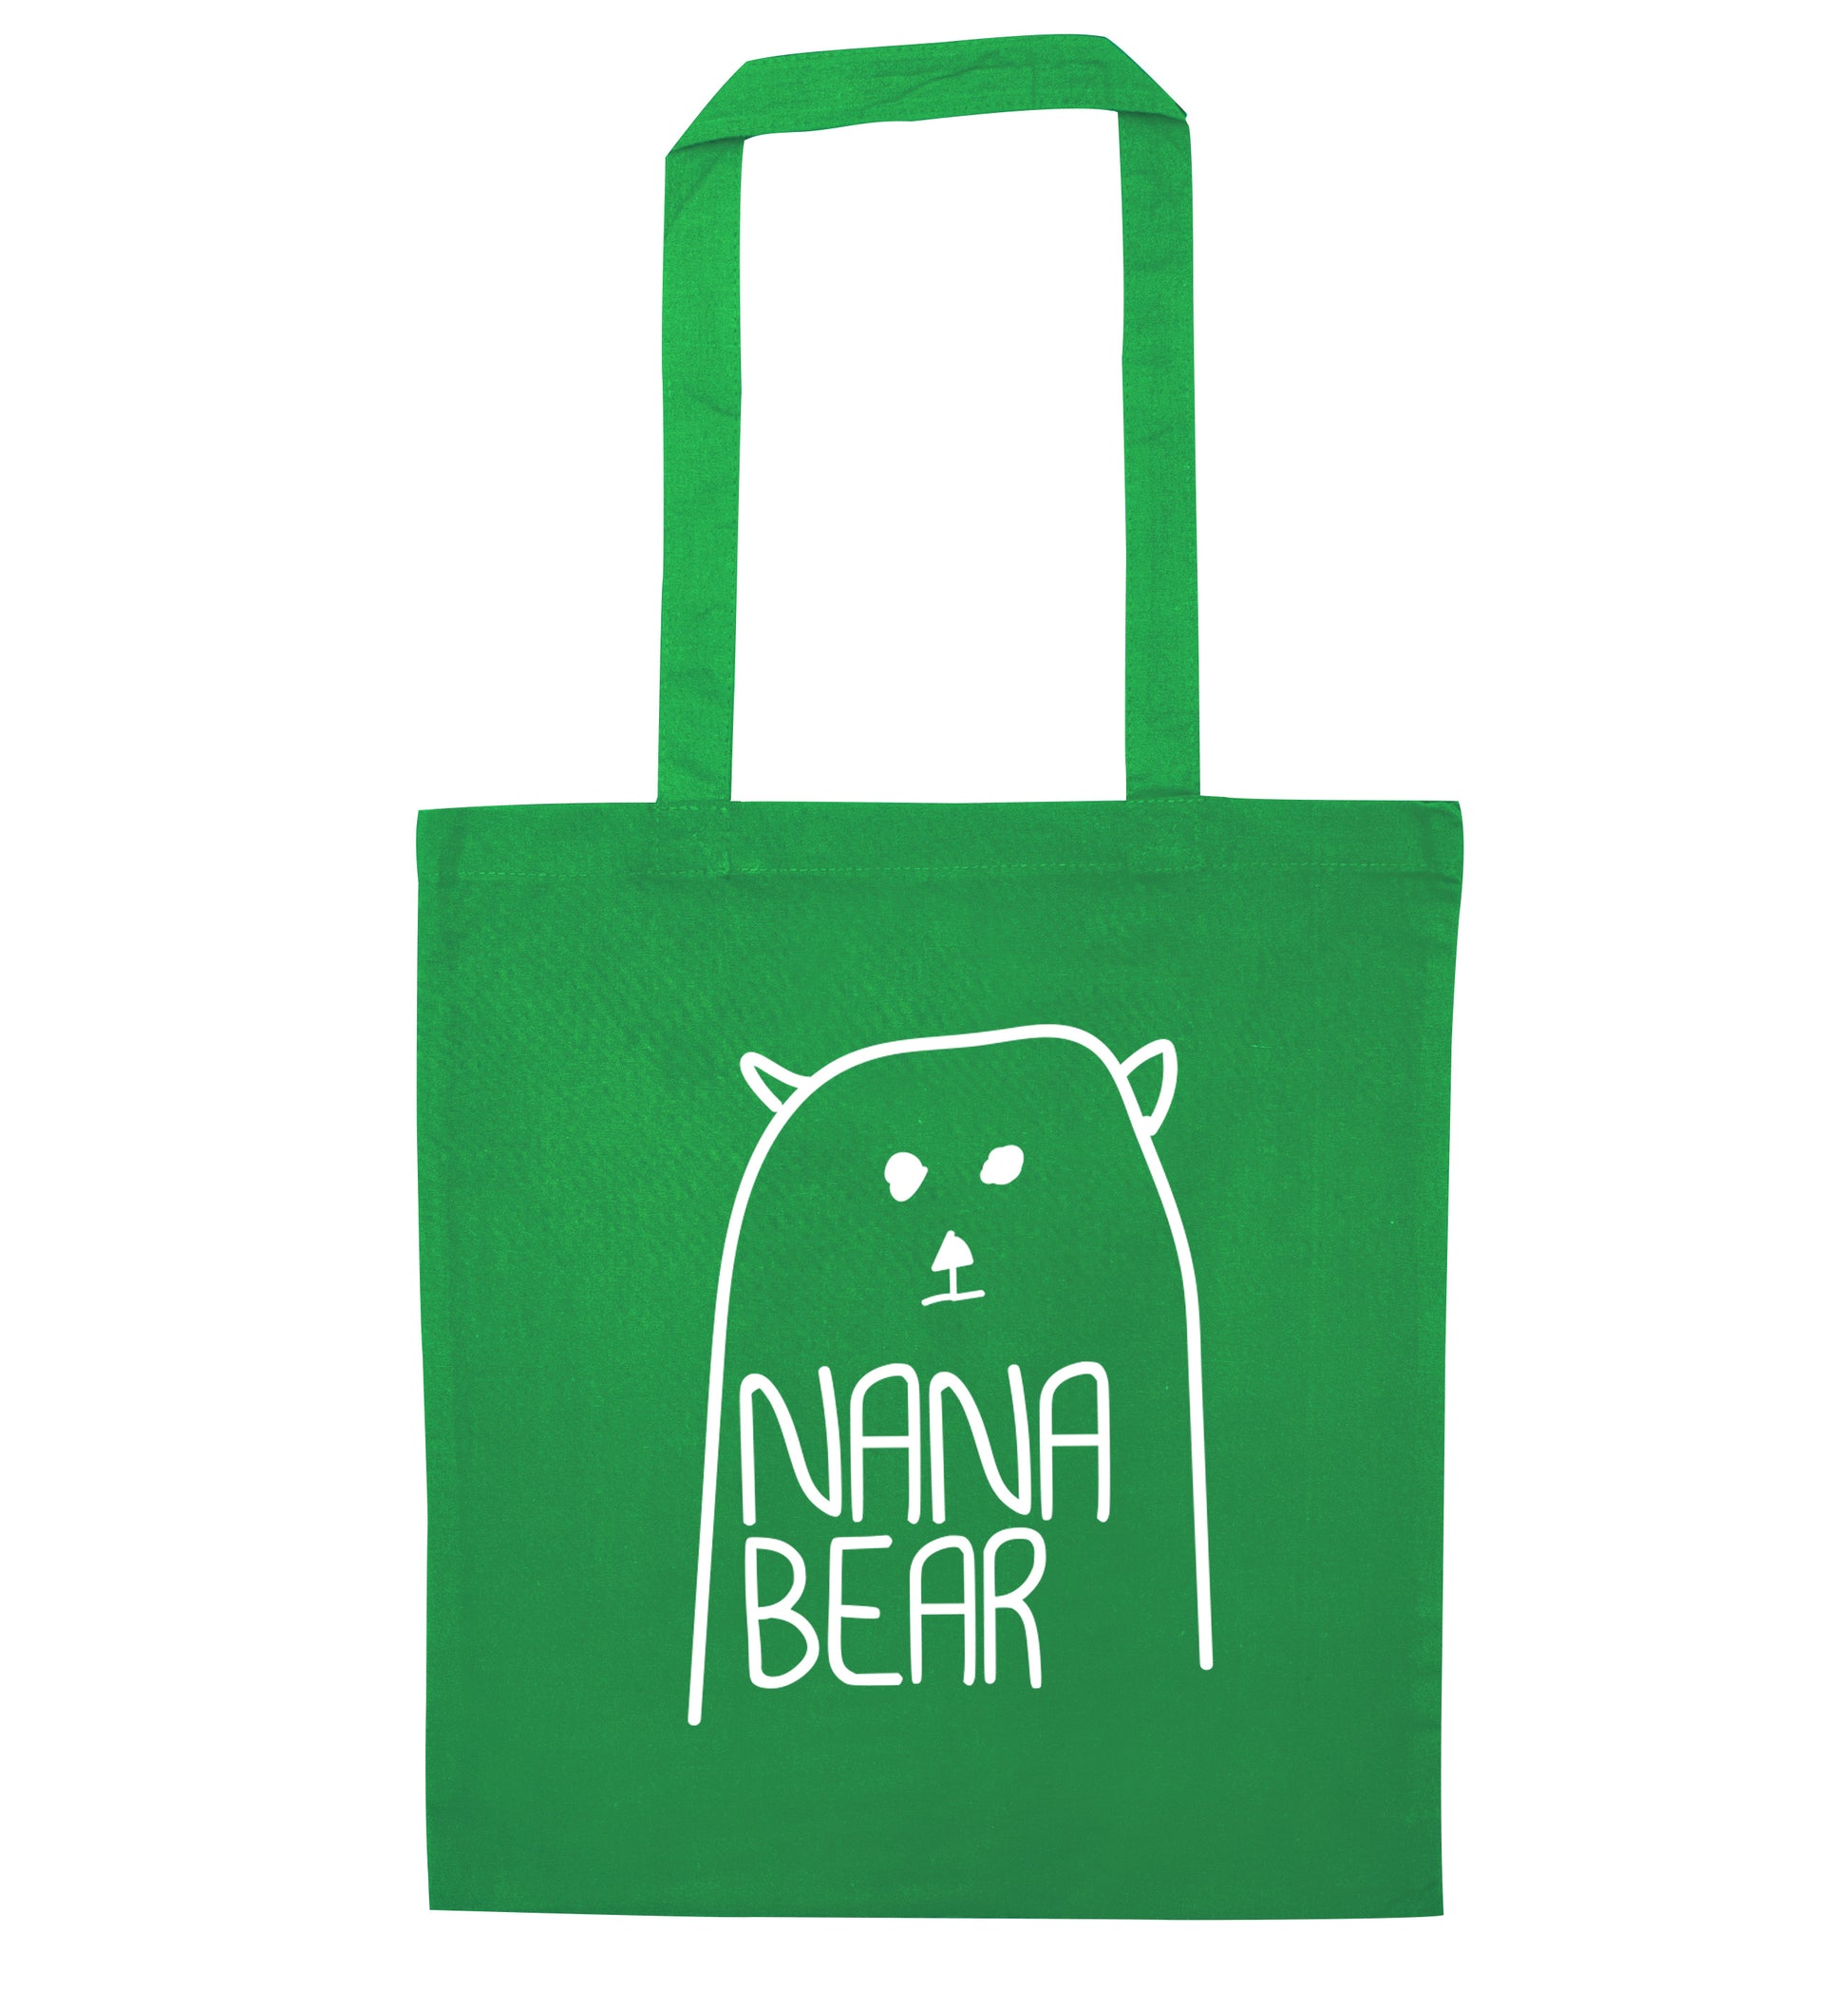 Nana bear green tote bag